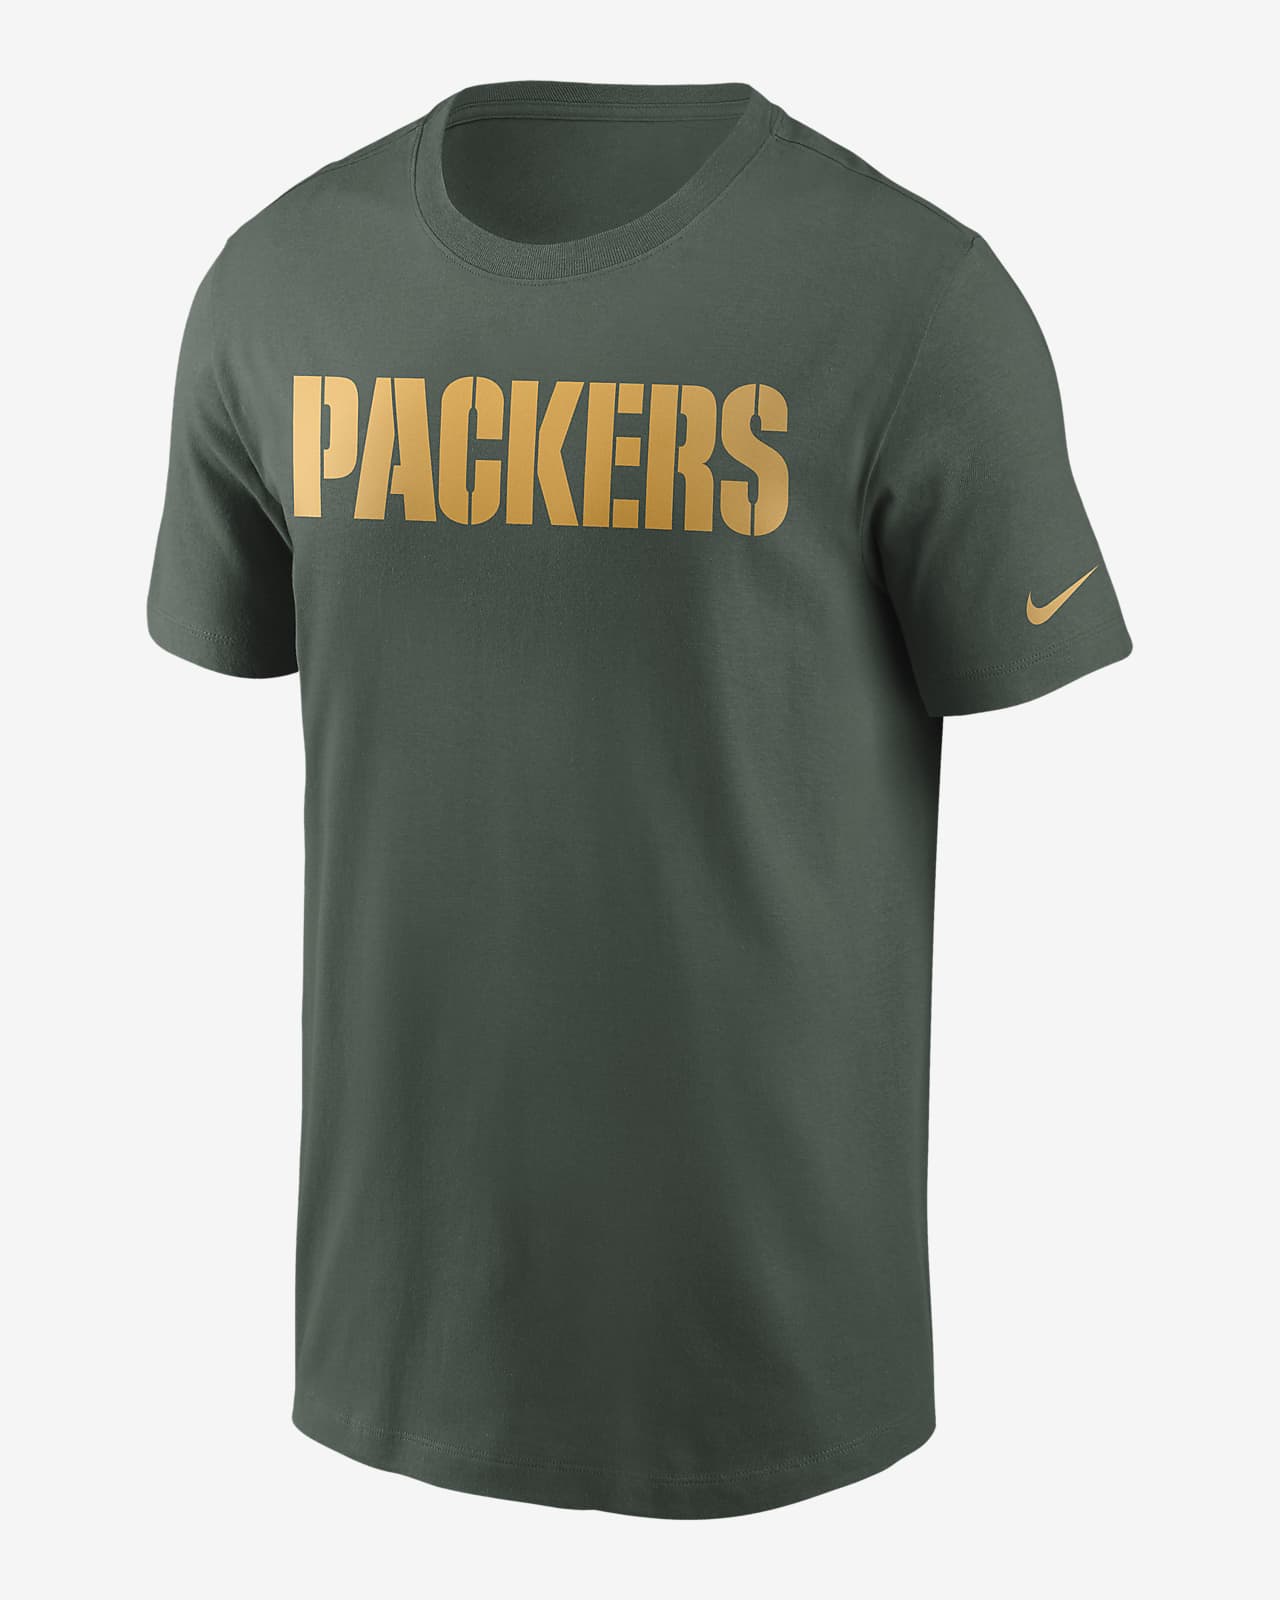 Nike (NFL Green Bay Packers) Men's T-Shirt